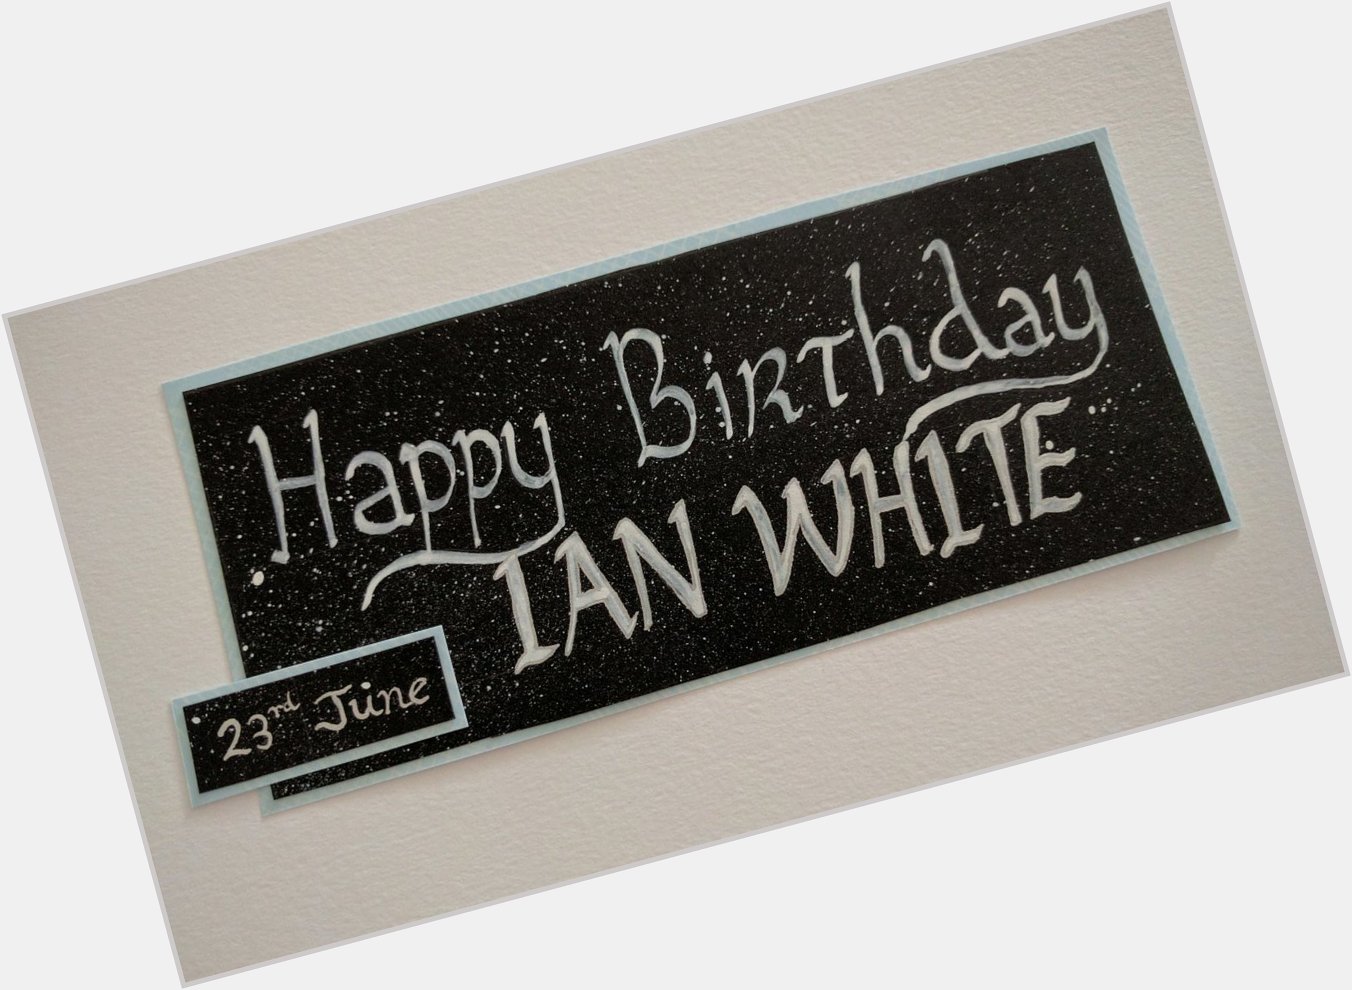 Happy Birthday to the wonderful Ian White!  